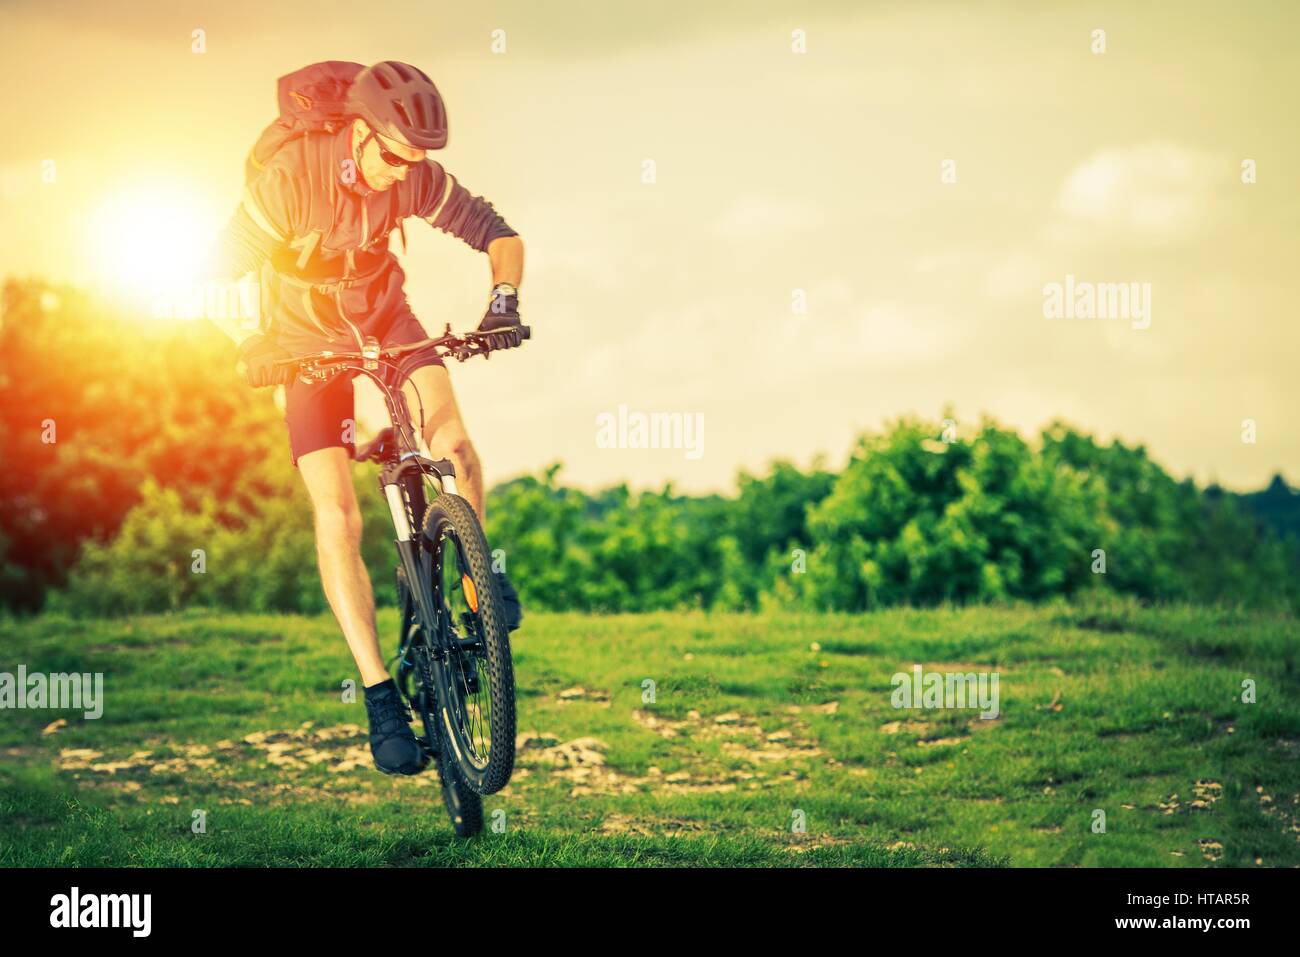 Extreme Mountain Biking. Summer Recreation and Sports Concept. Caucasian Biker. Stock Photo